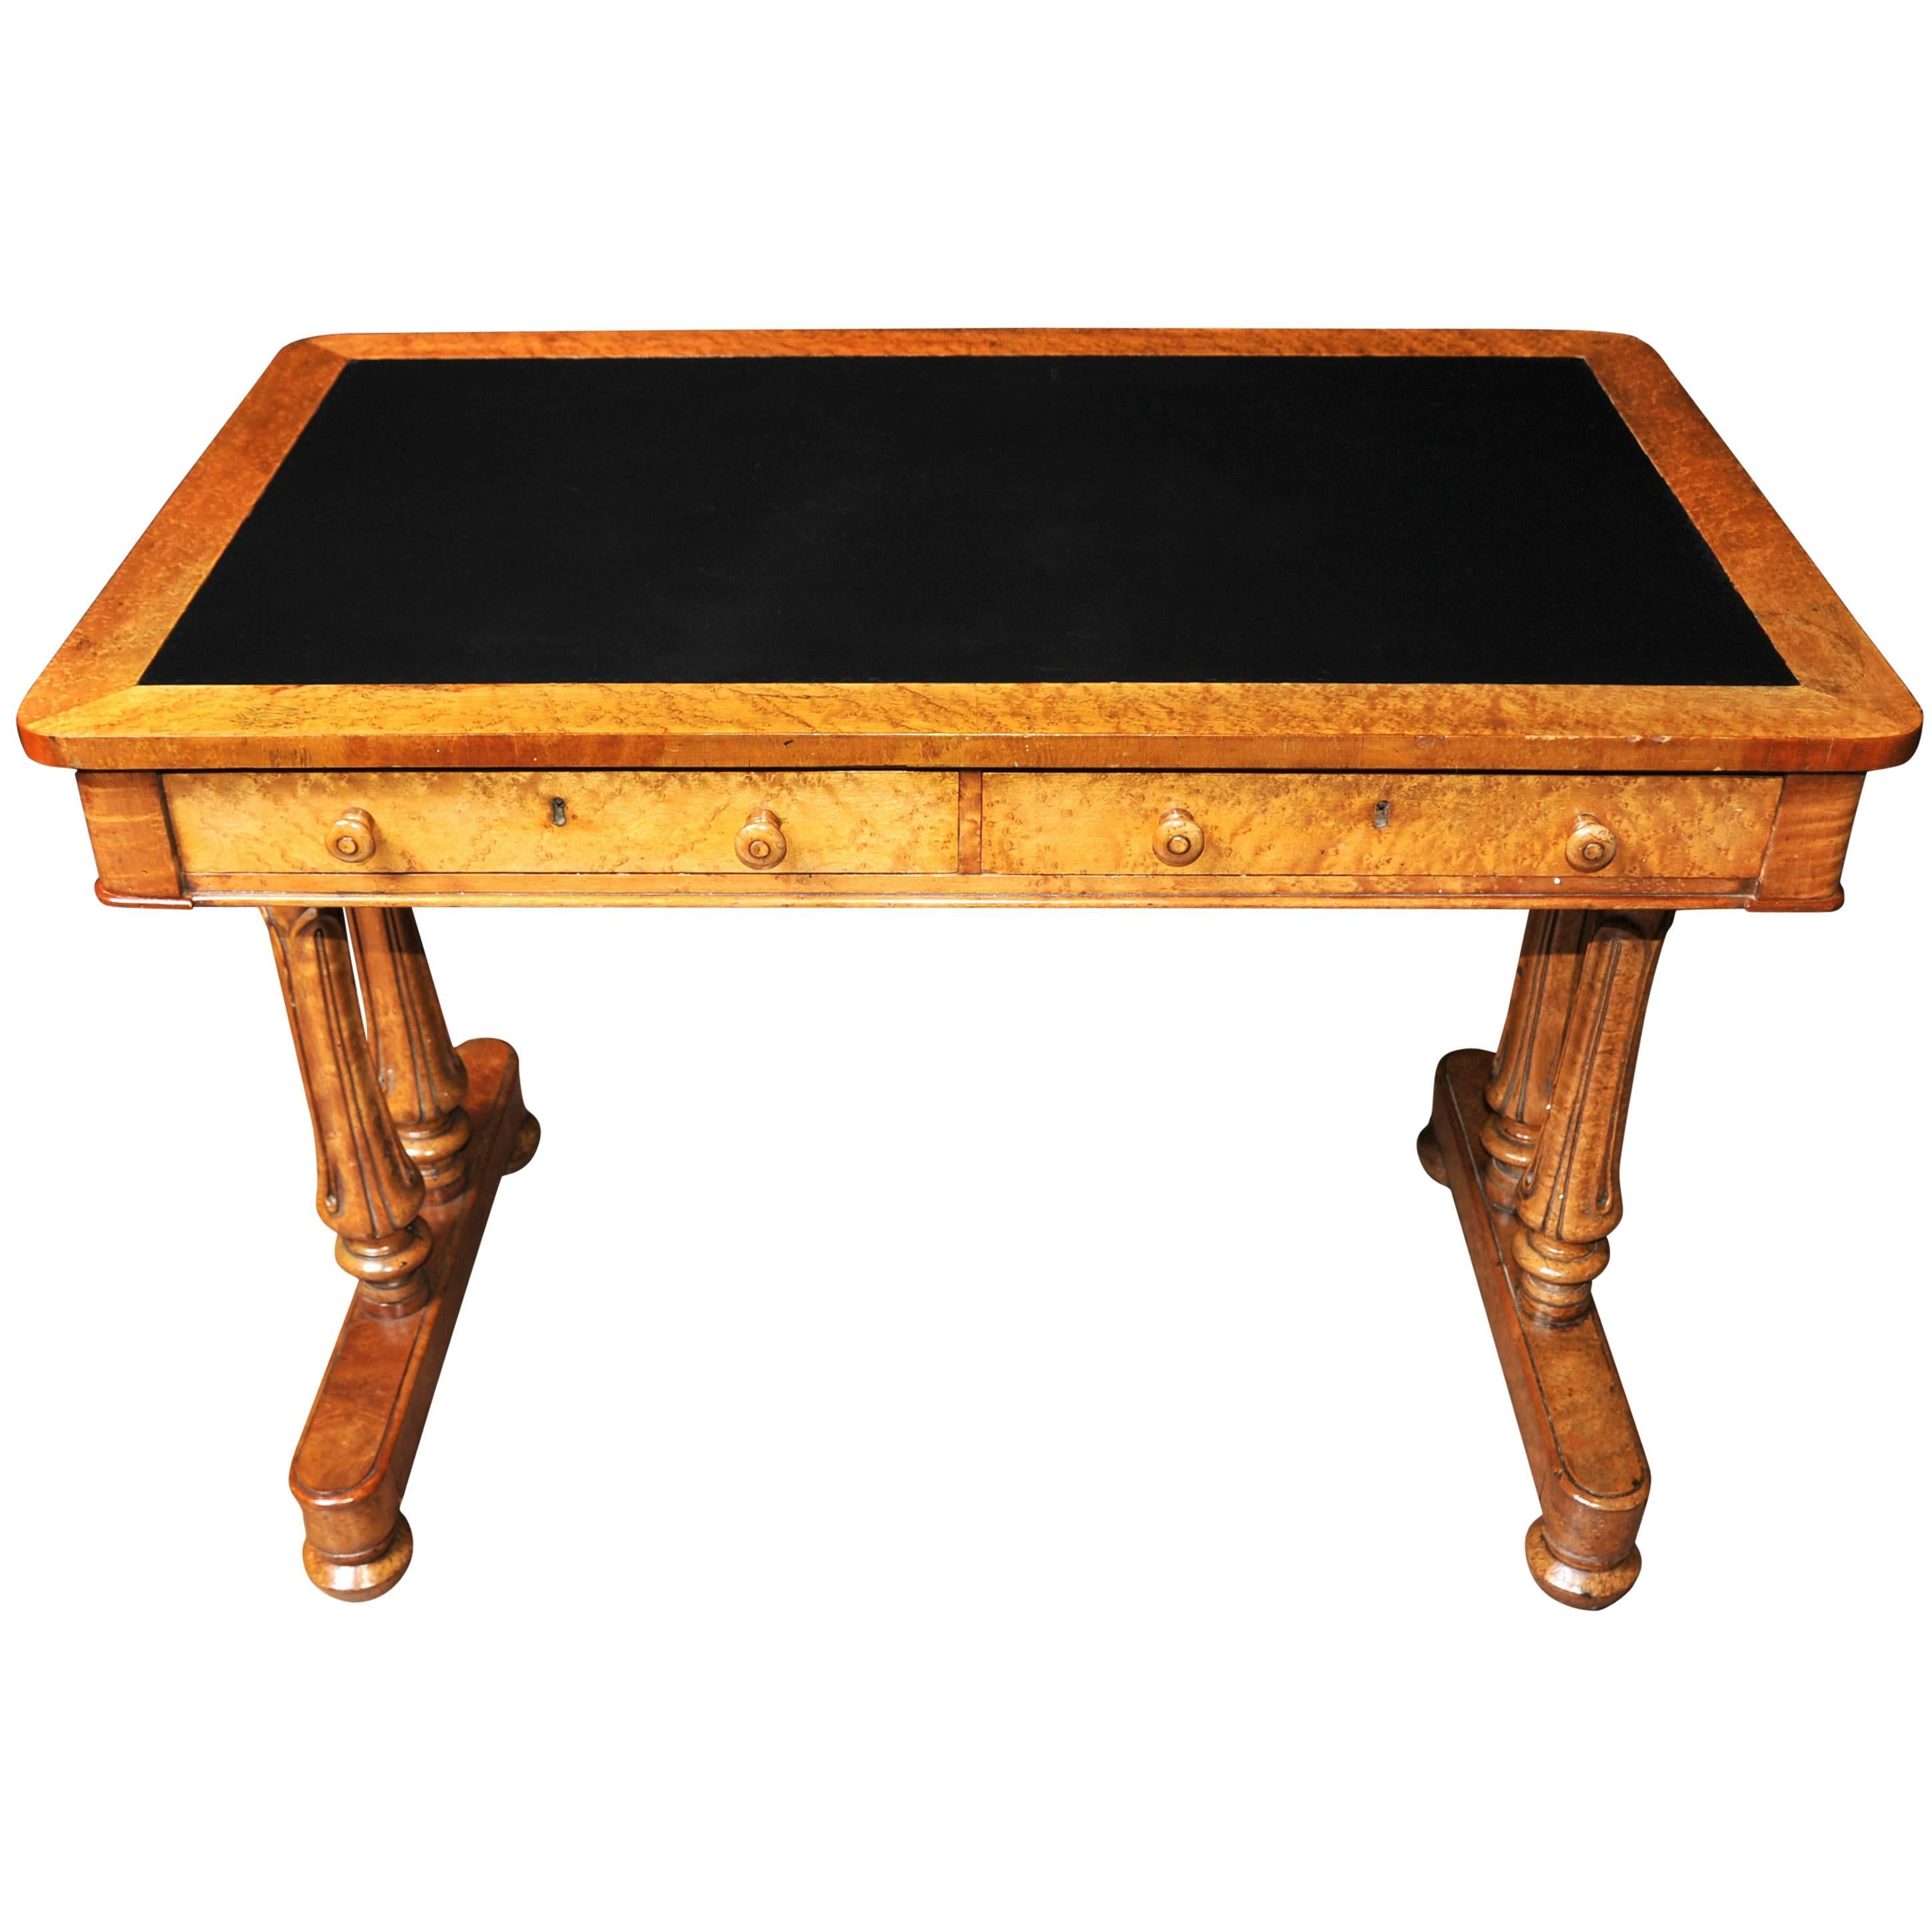 Antique Maple Wood Regency Writing Table Desk, circa 1830 Tulip Legs For Sale